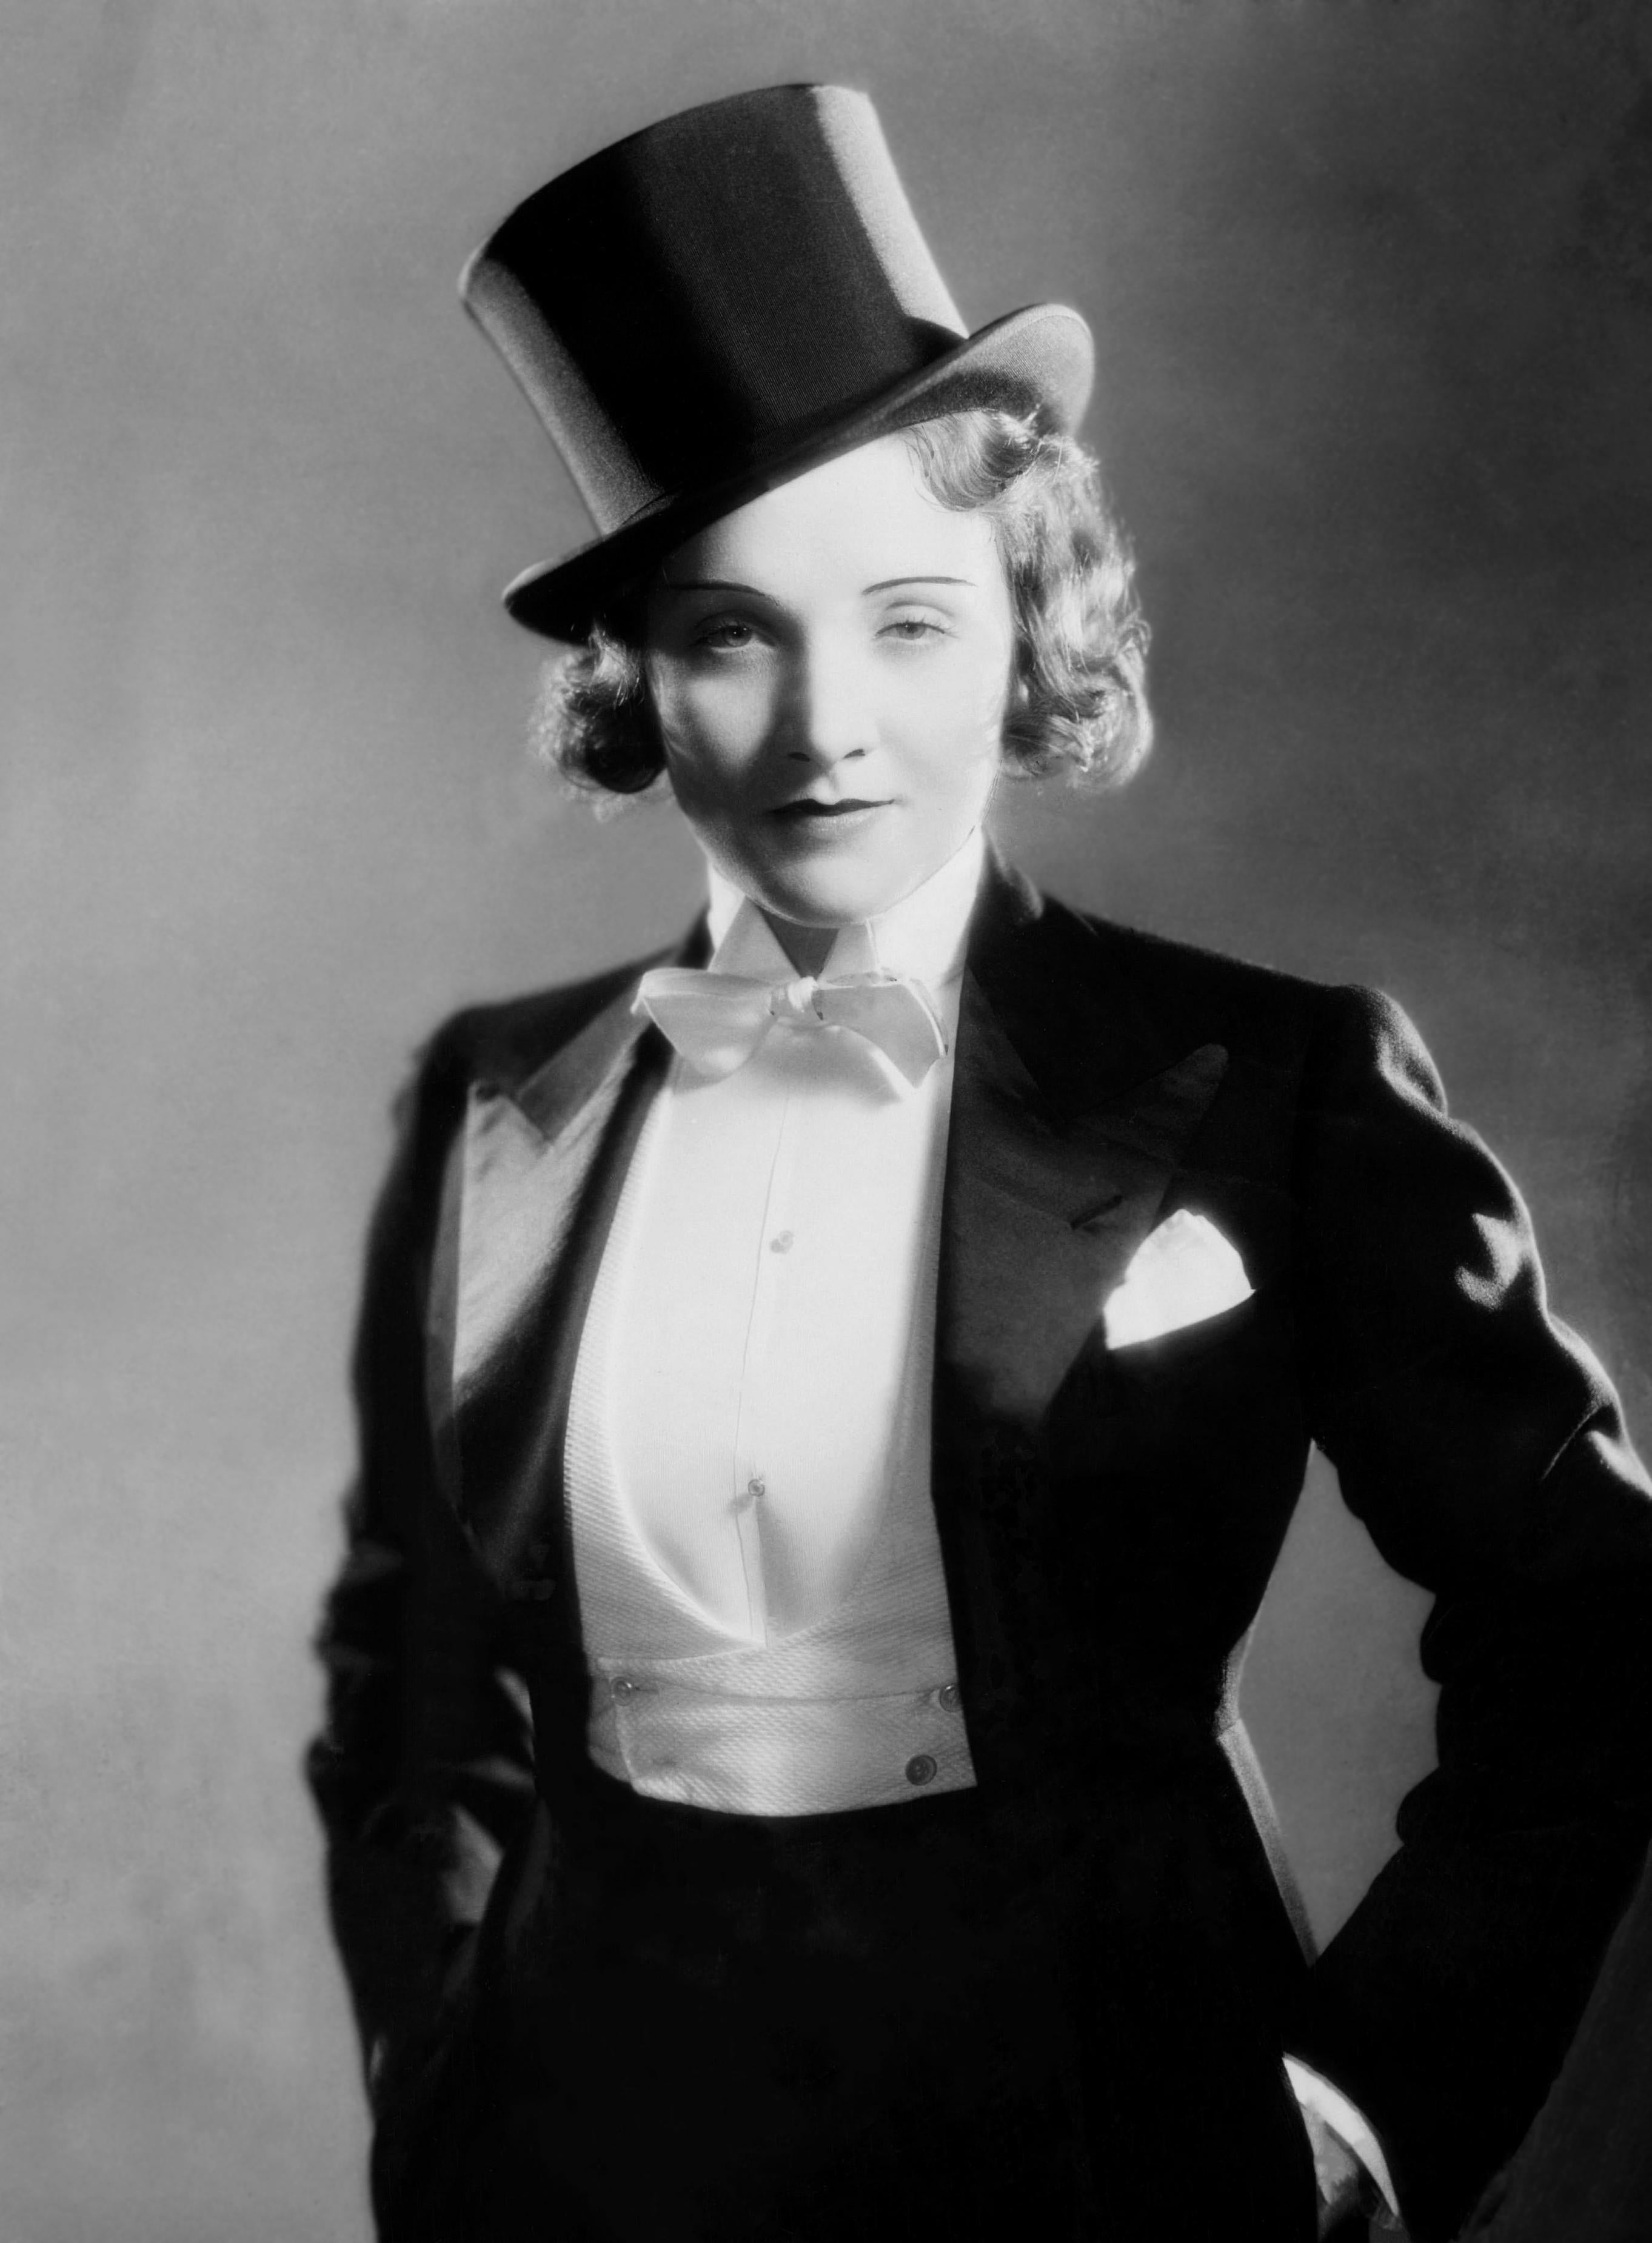 Unknown Portrait Photograph - Marlene Dietrich in Suit for "Morocco" II Globe Photos Fine Art Print